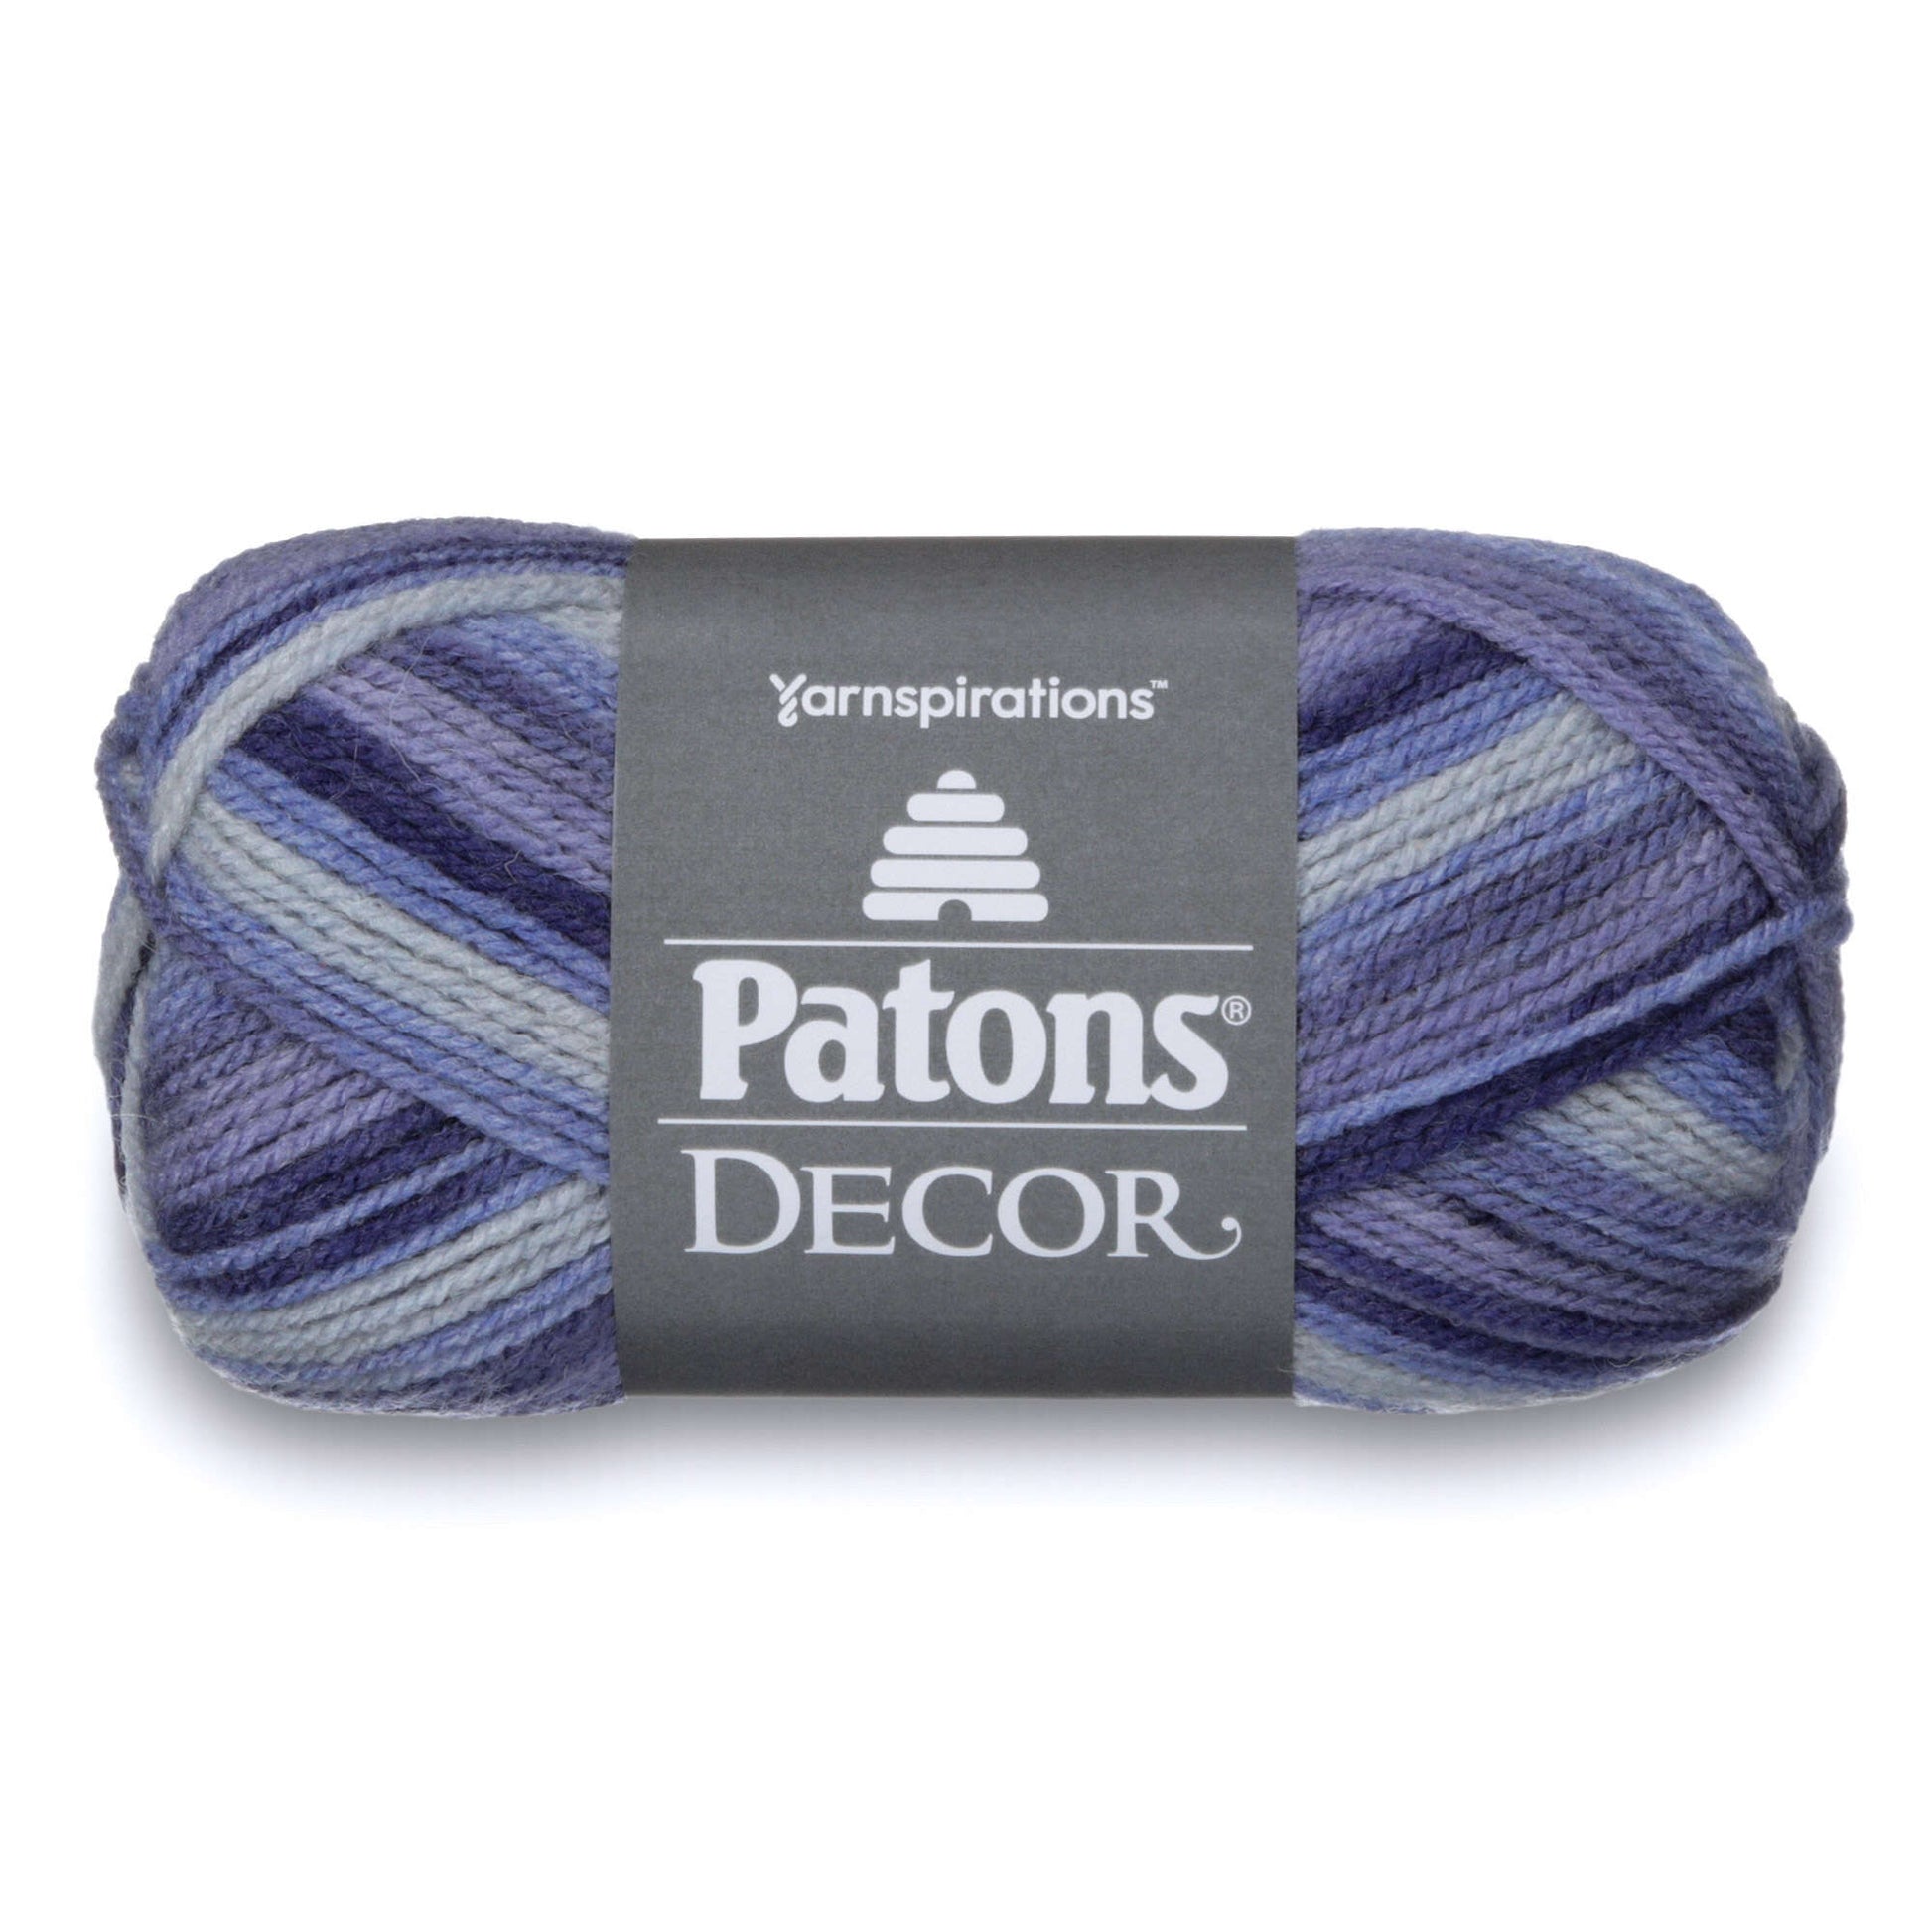 Patons Decor Yarn - Discontinued Shades